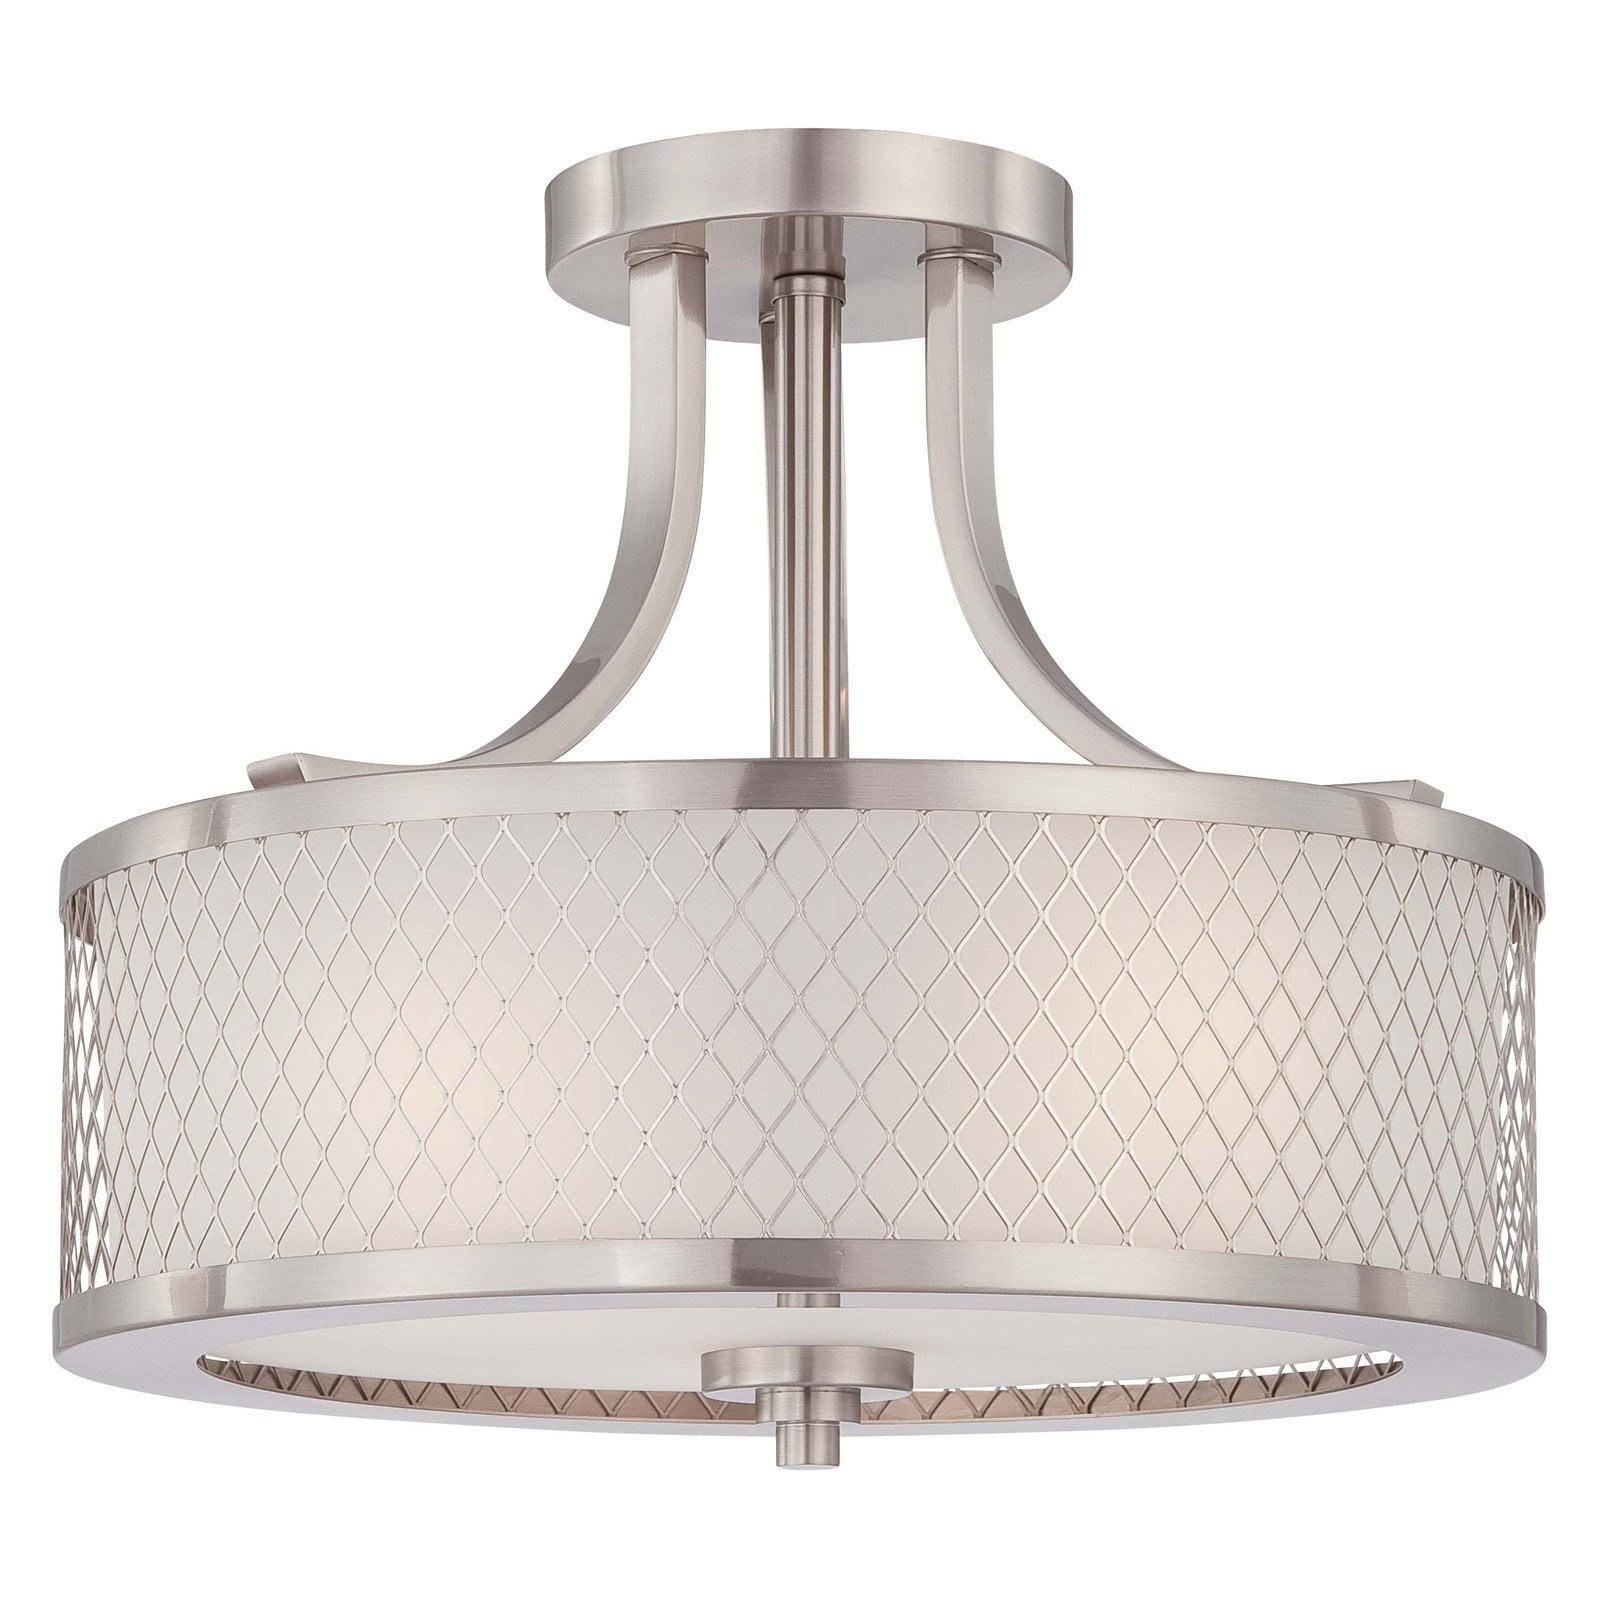 Elegant Art Deco Inspired 12" Drum Semi-Flush Light in Brushed Nickel